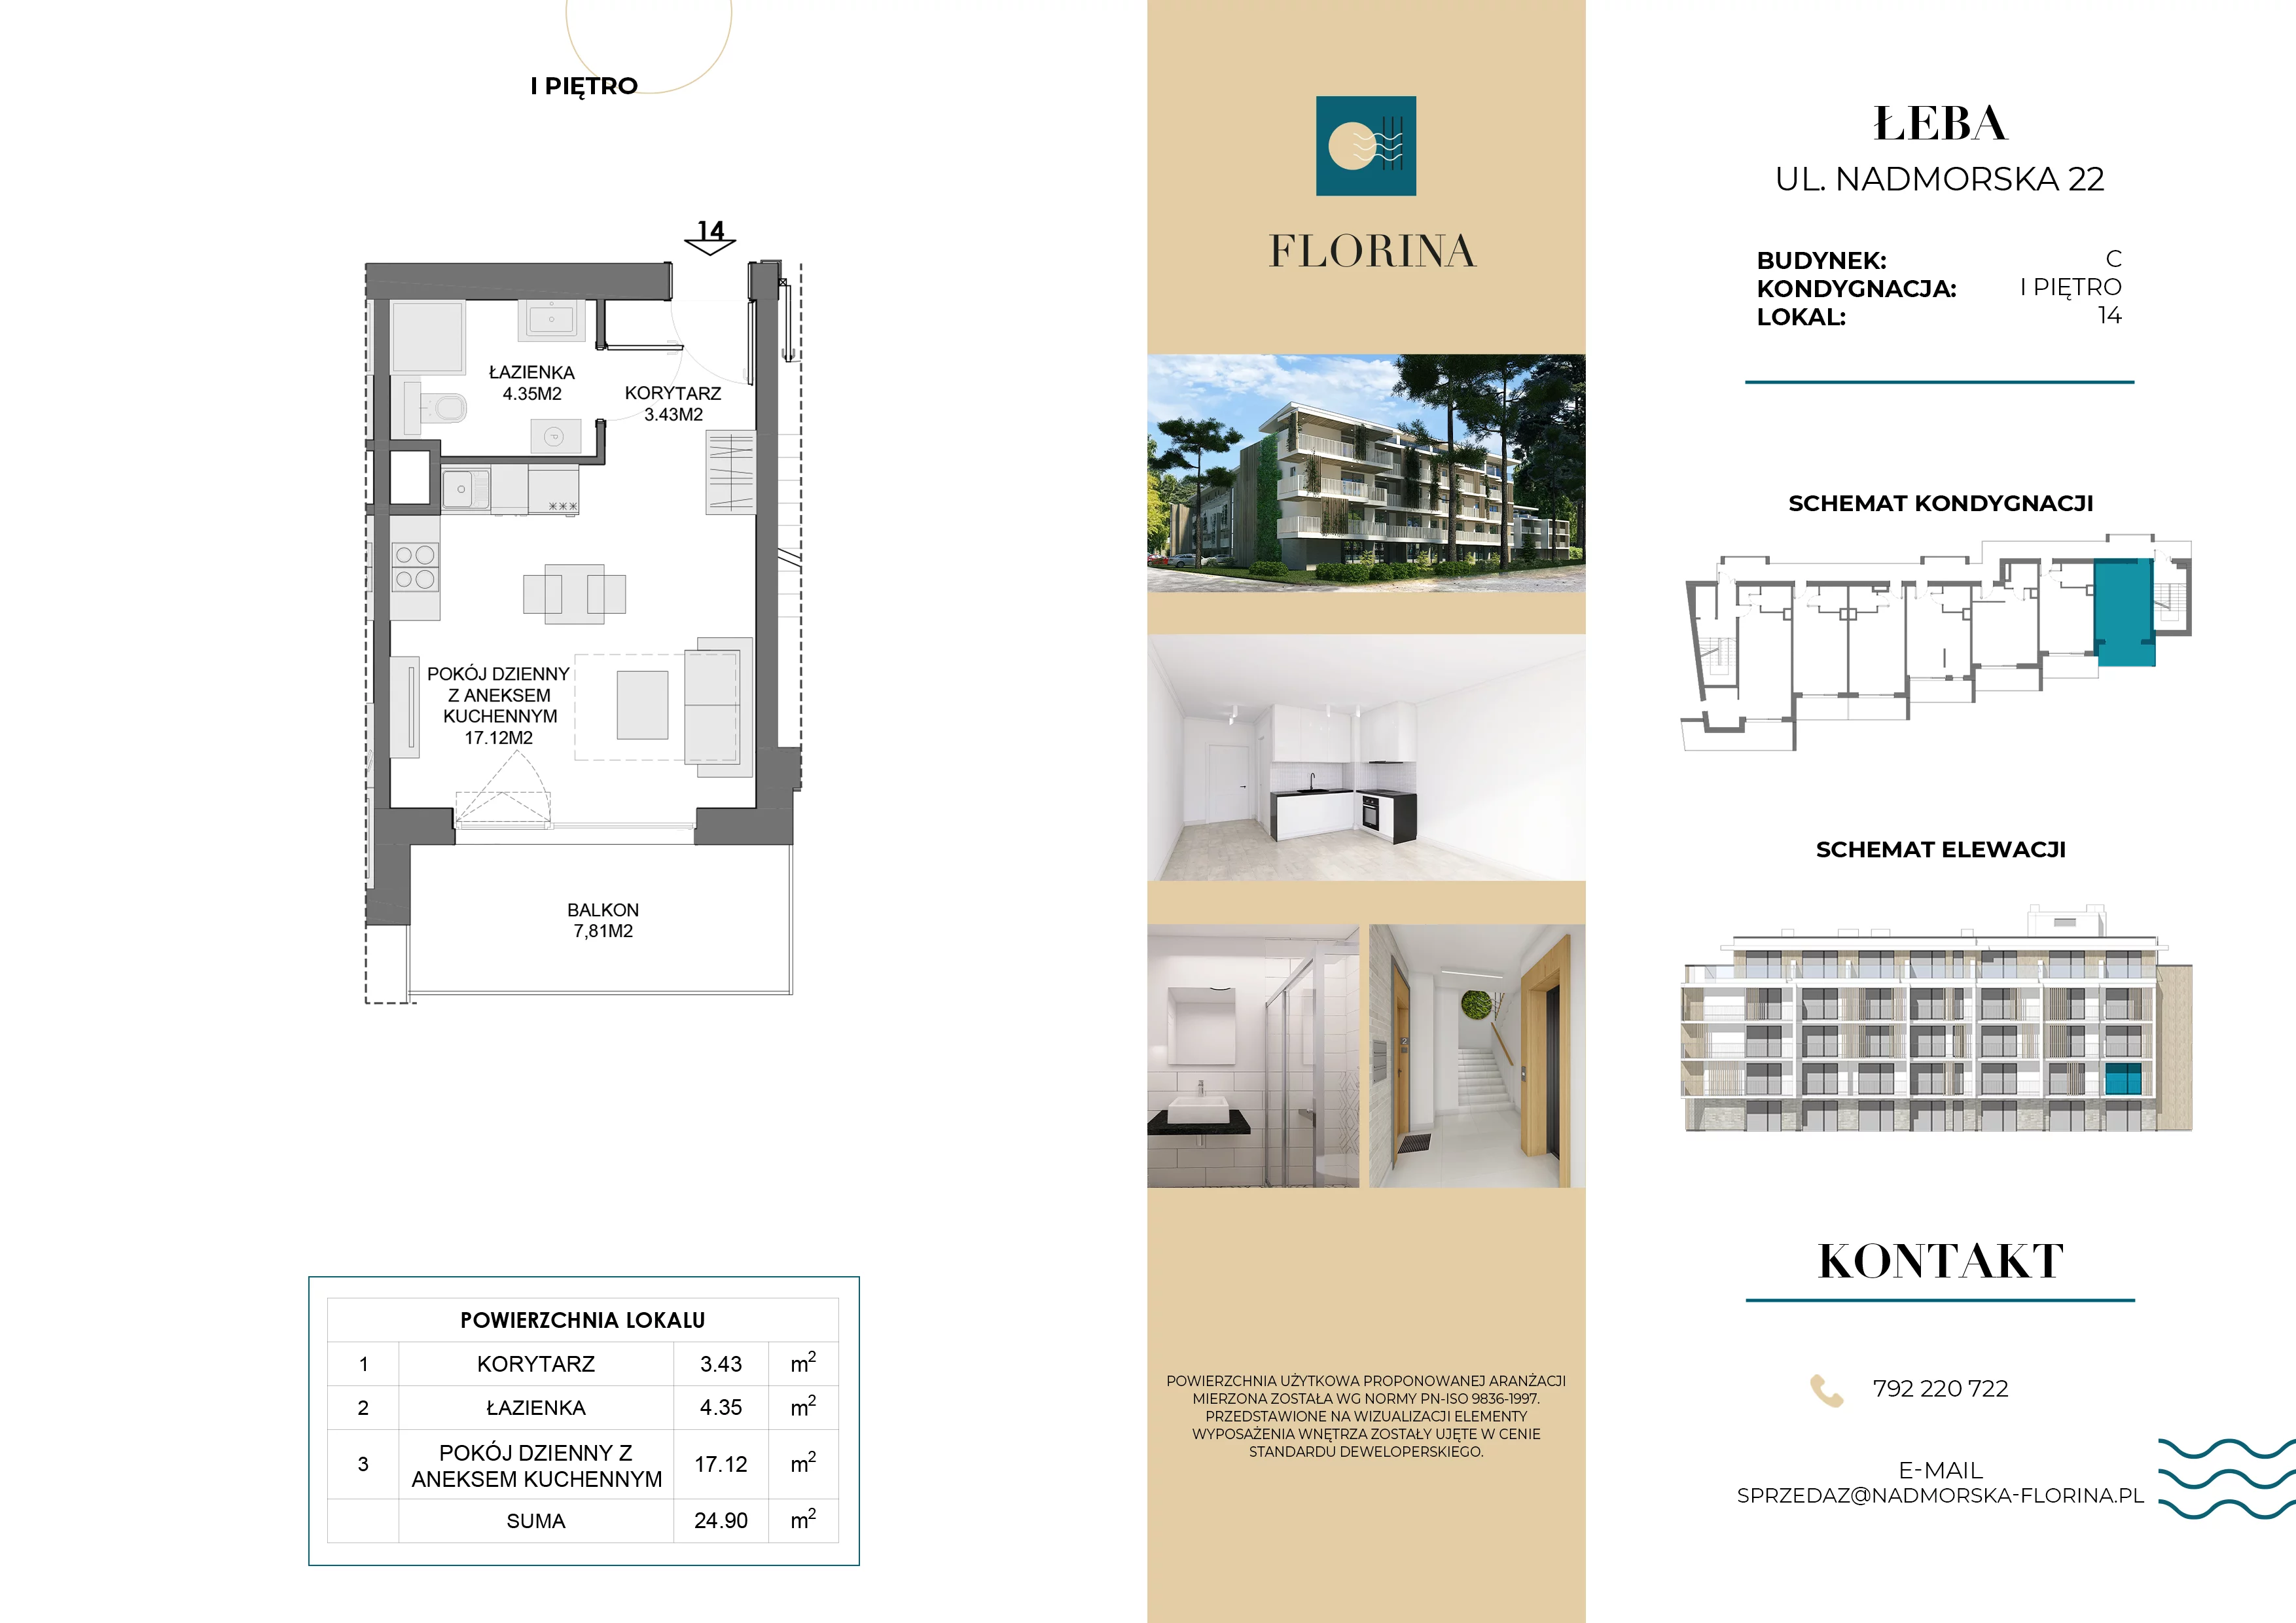 Apartament inwestycyjny 24,89 m², piętro 1, oferta nr C.M14, Nadmorska Florina, Łeba, ul. Nadmorska